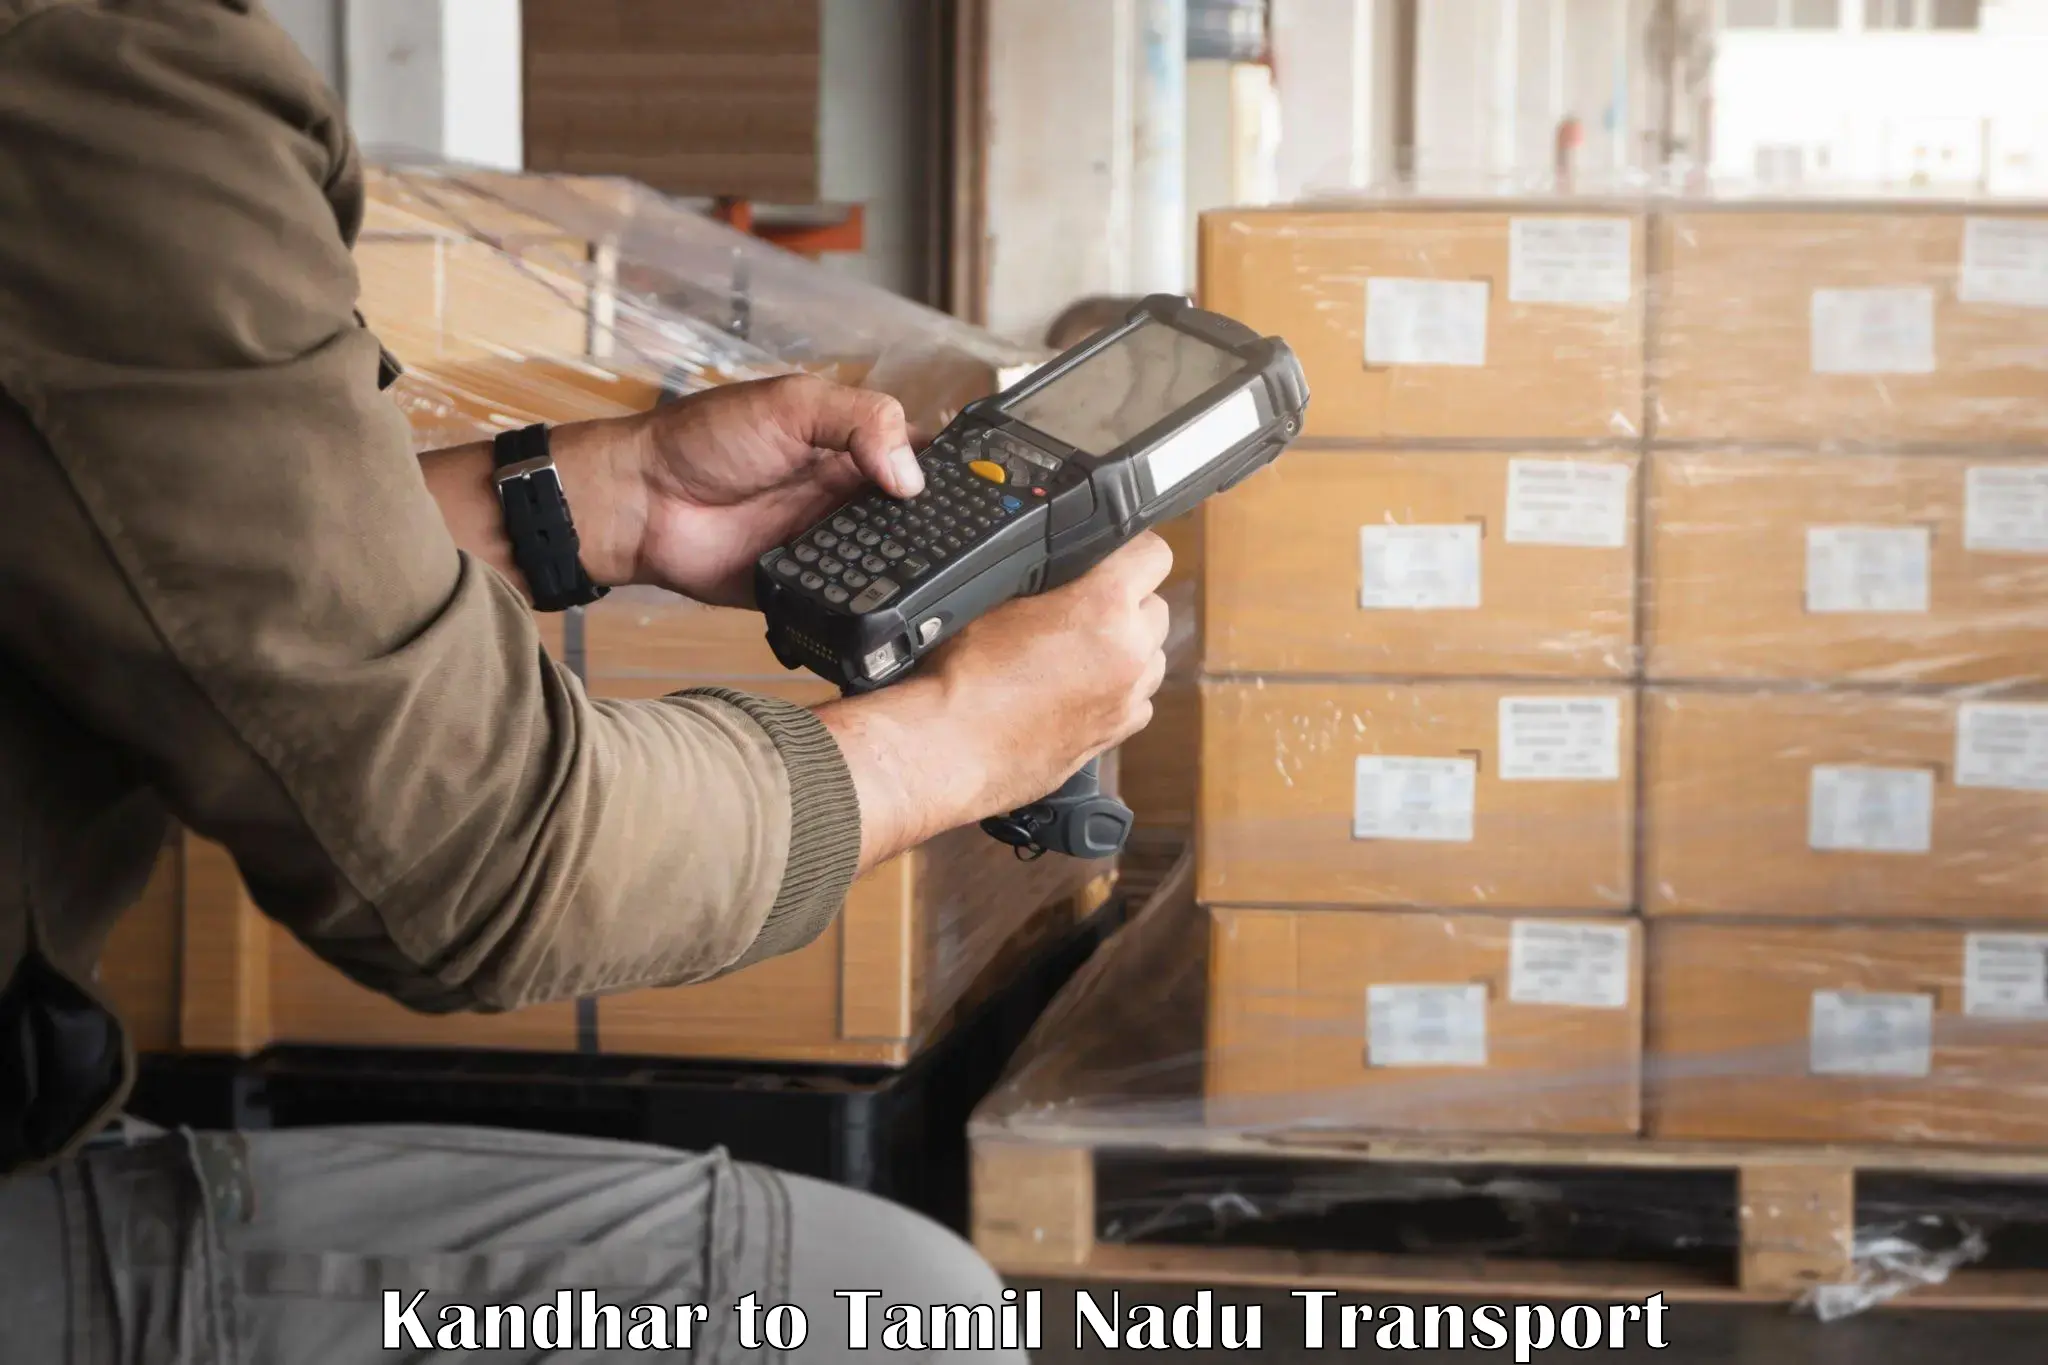 Shipping partner Kandhar to Udumalpet